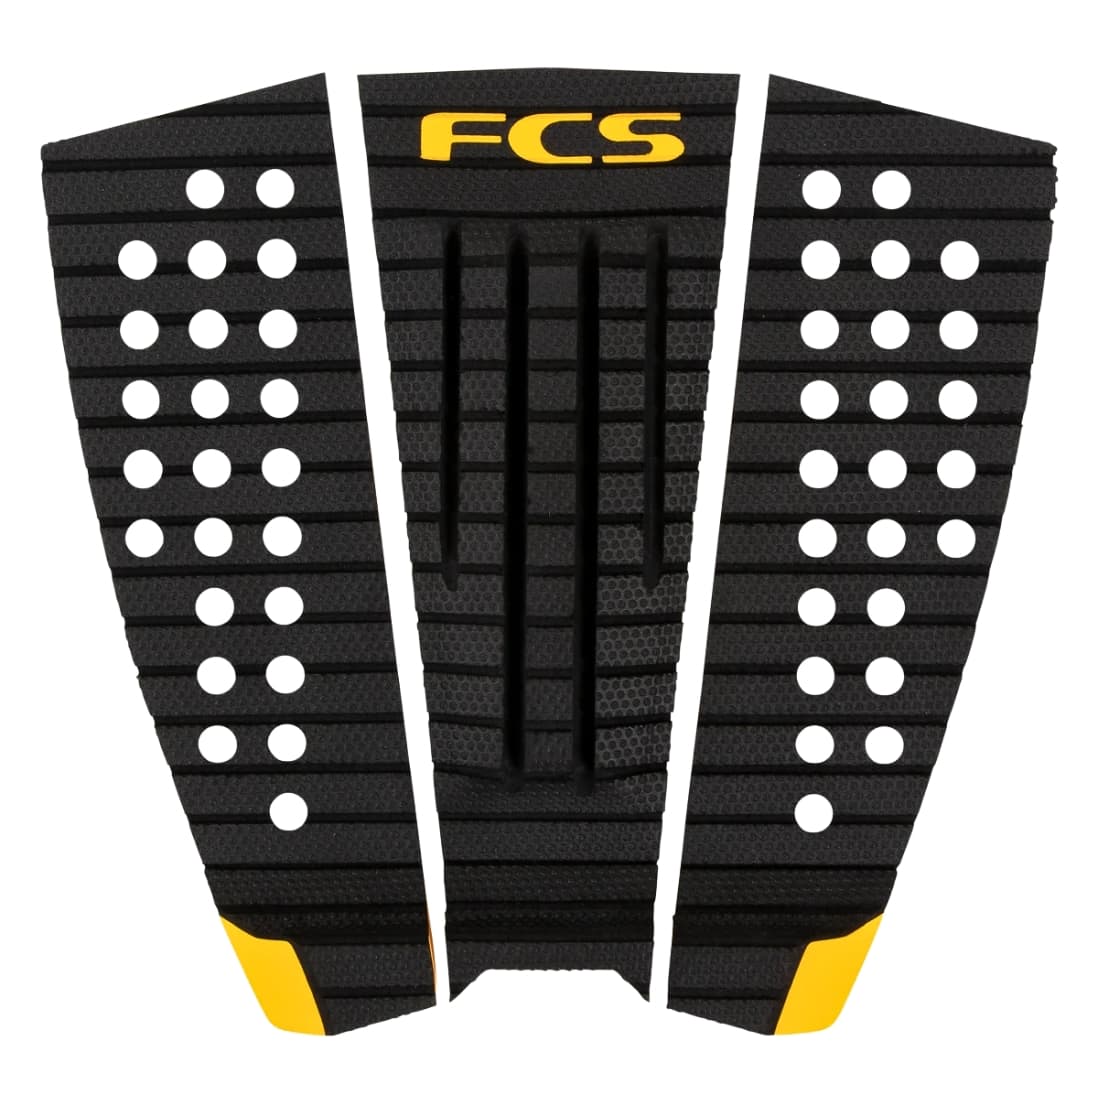 FCS Julian Wilson Tread-Lite 3 Piece Surfboard Tail Pad - Charcoal/Mango - 3 Piece Tail Pad by FCS